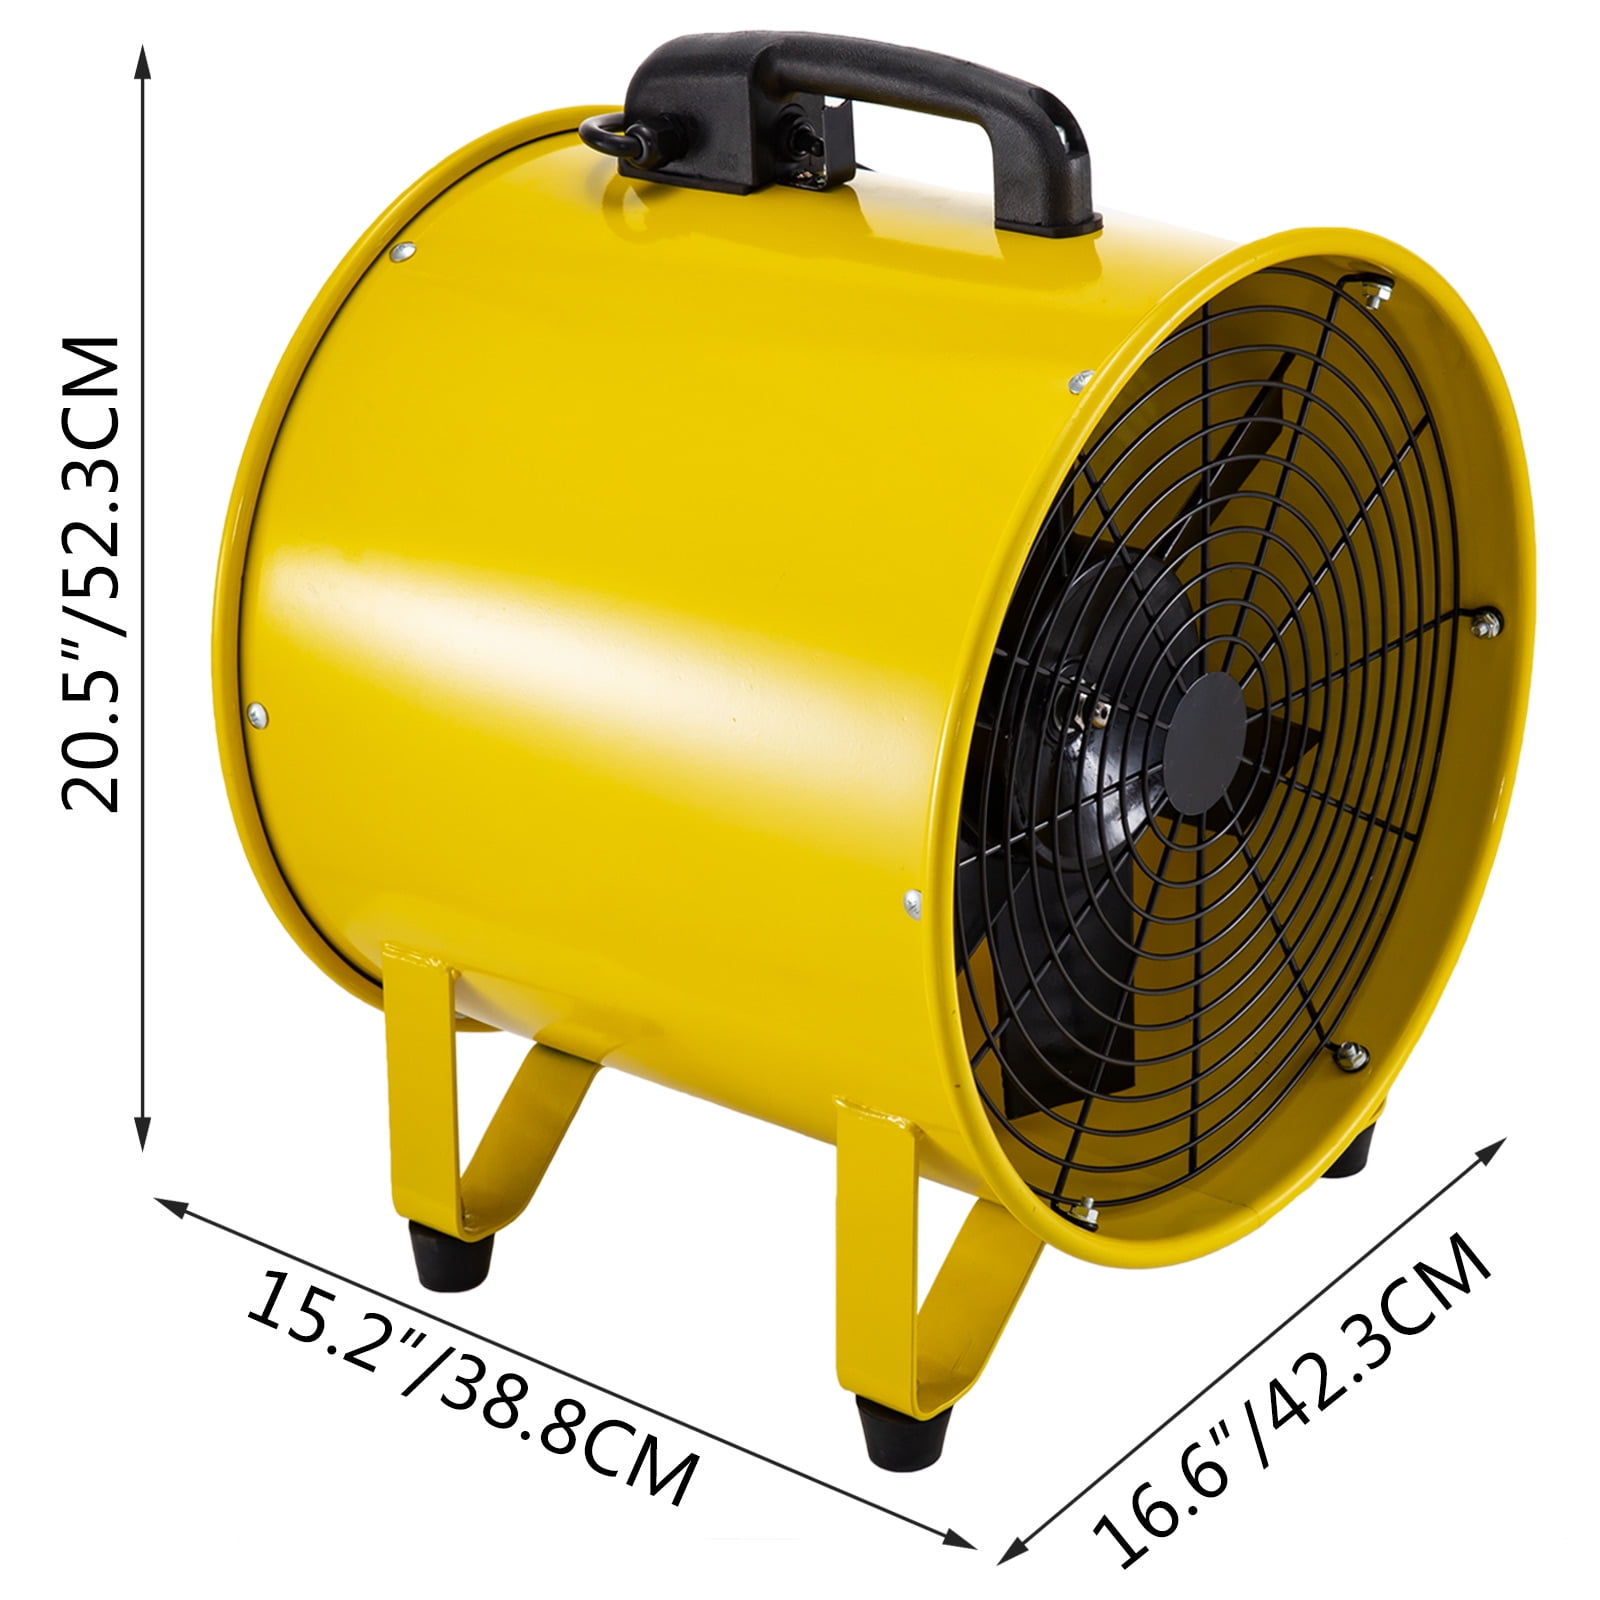 VEVOR 16 400mm Portable Ventilation Fan With 10m Pvc Ducting